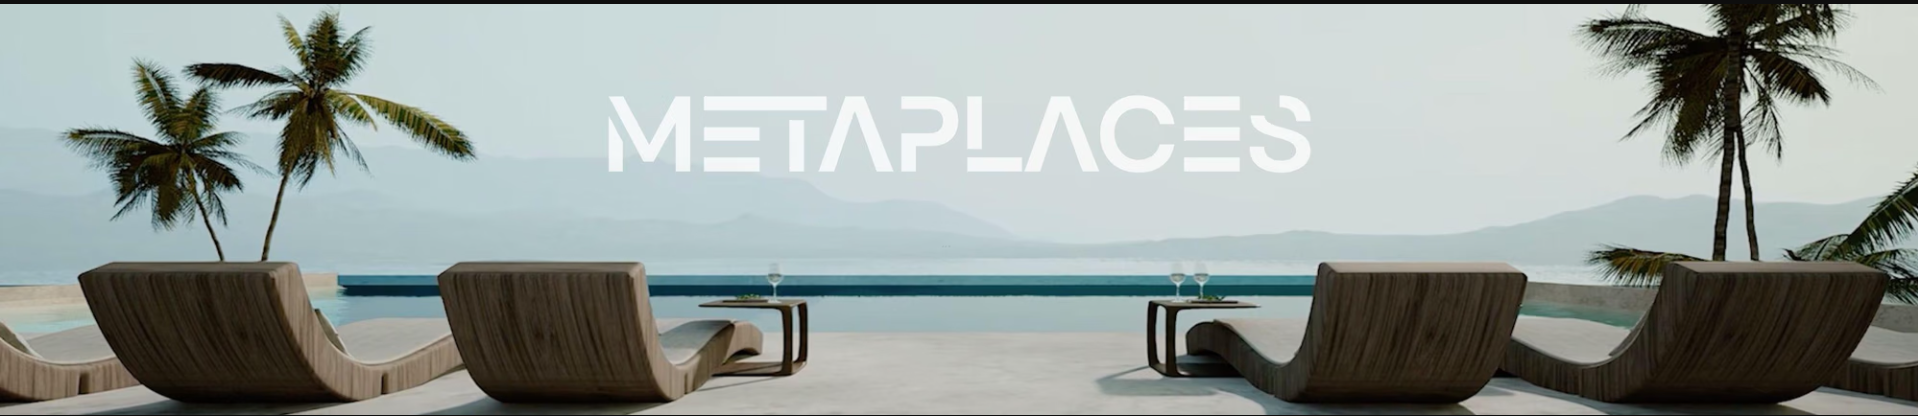 metaplaces luxury properties